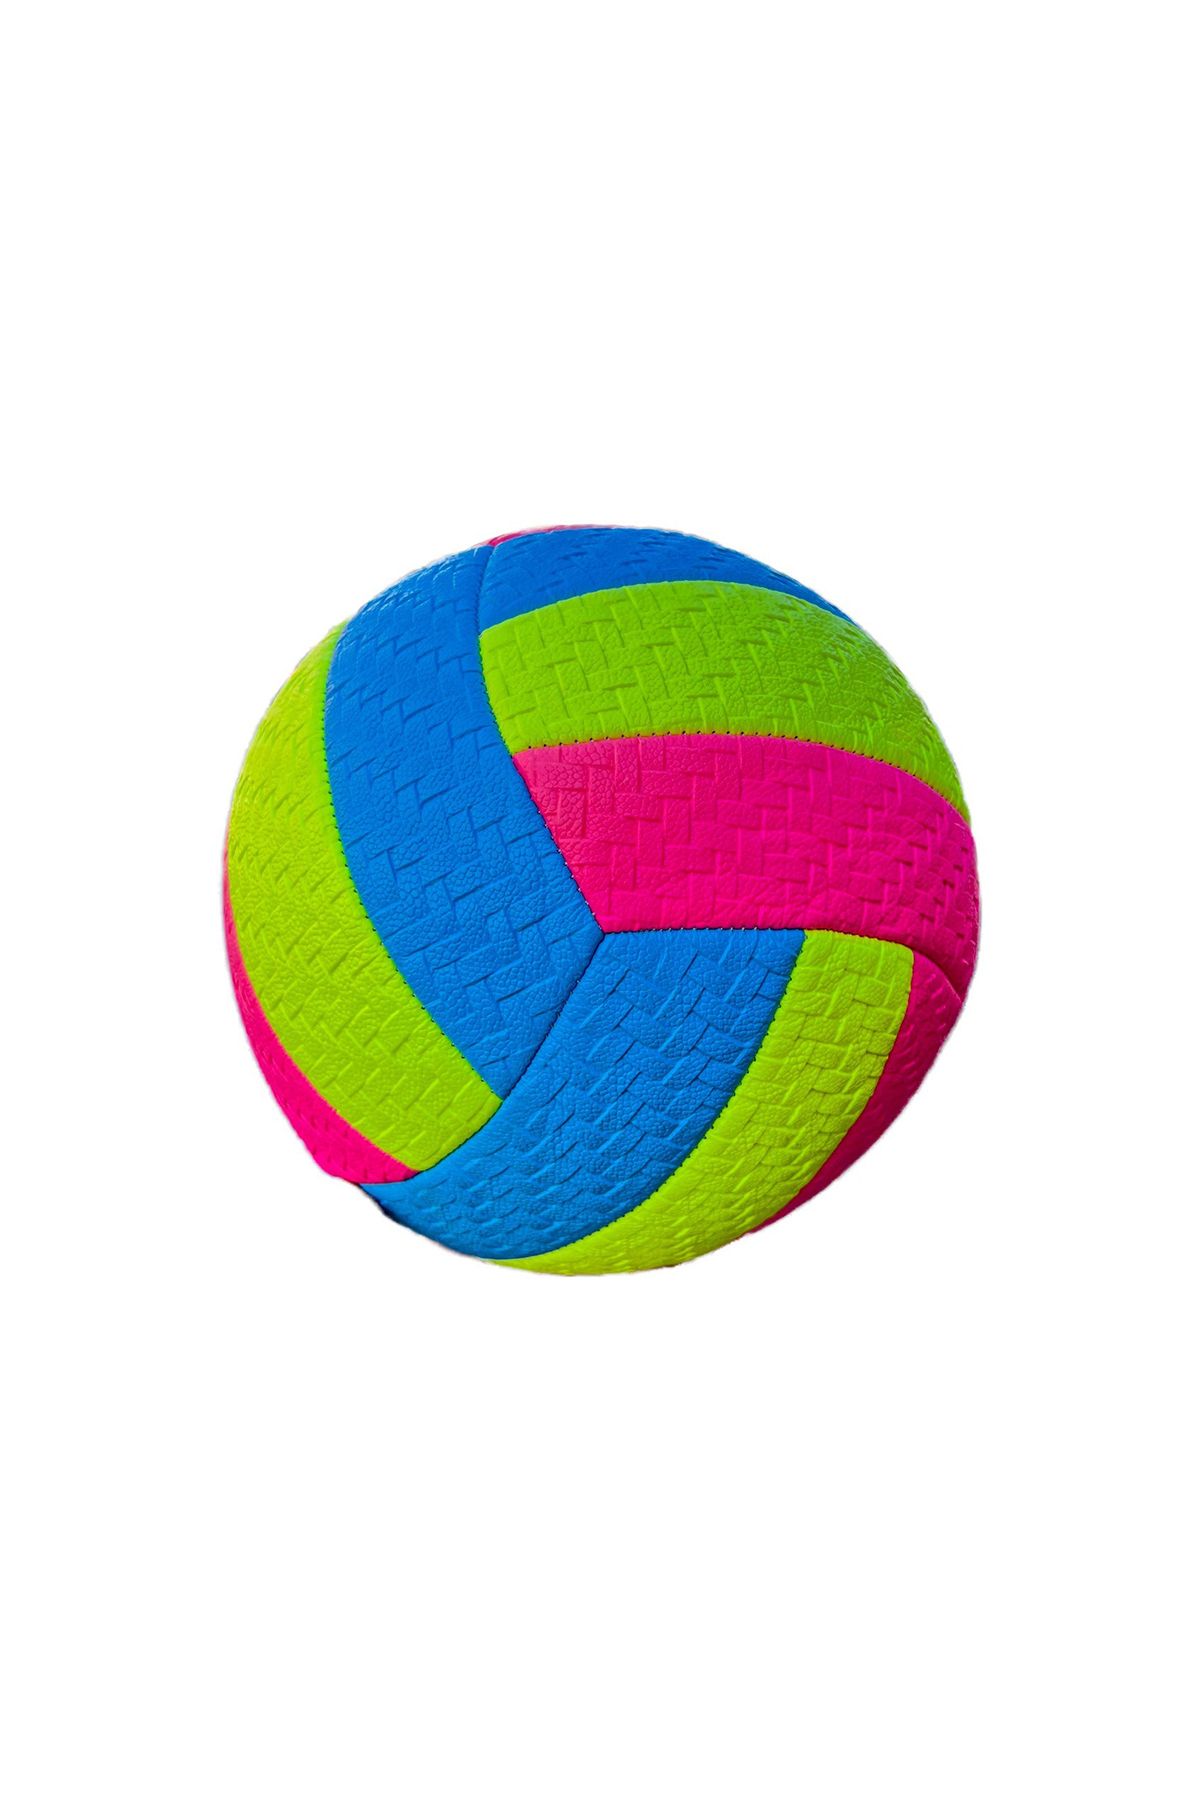 Elif mağazacılık Soft Voleybol Topu no:1